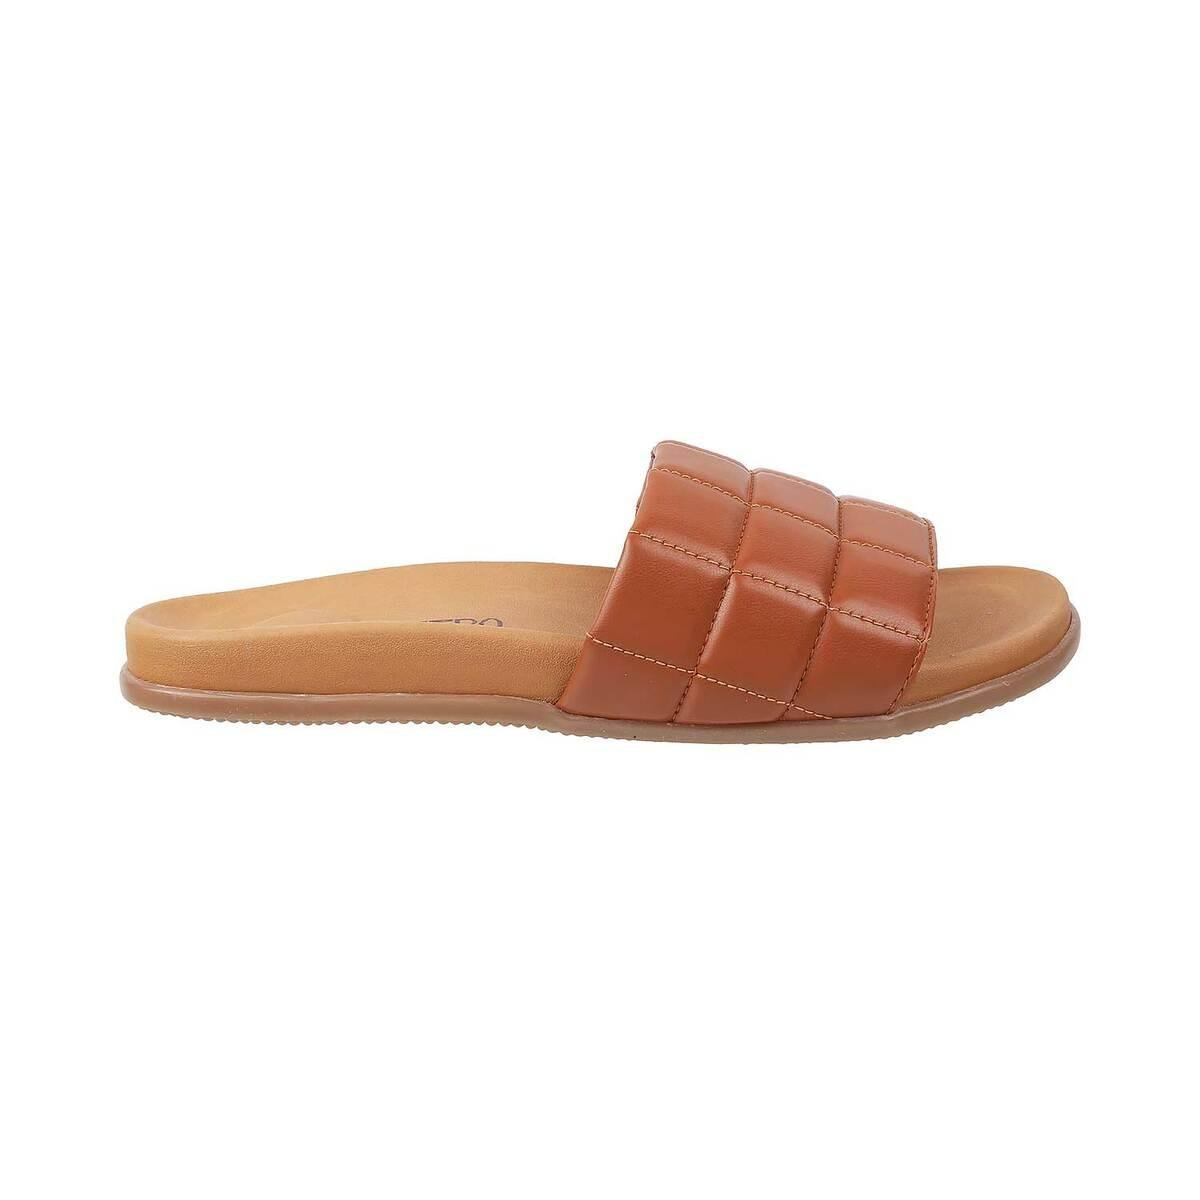 Buy Women Tan Casual Slippers Online | SKU: 41-4188-23-37-Metro Shoes